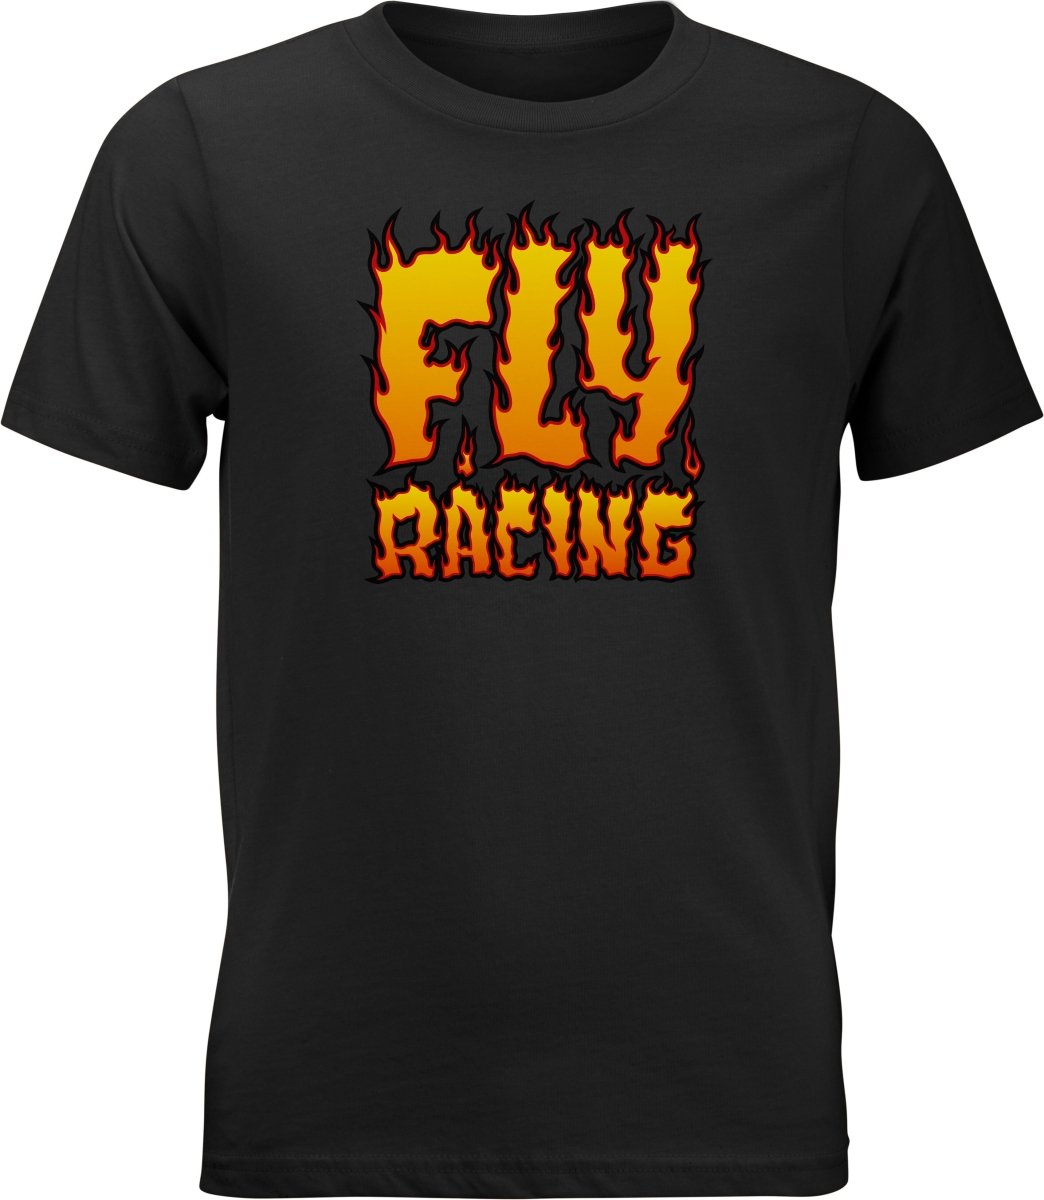 FLY RACING - YOUTH FIRE TEE - 352-0653YL - 191361242342